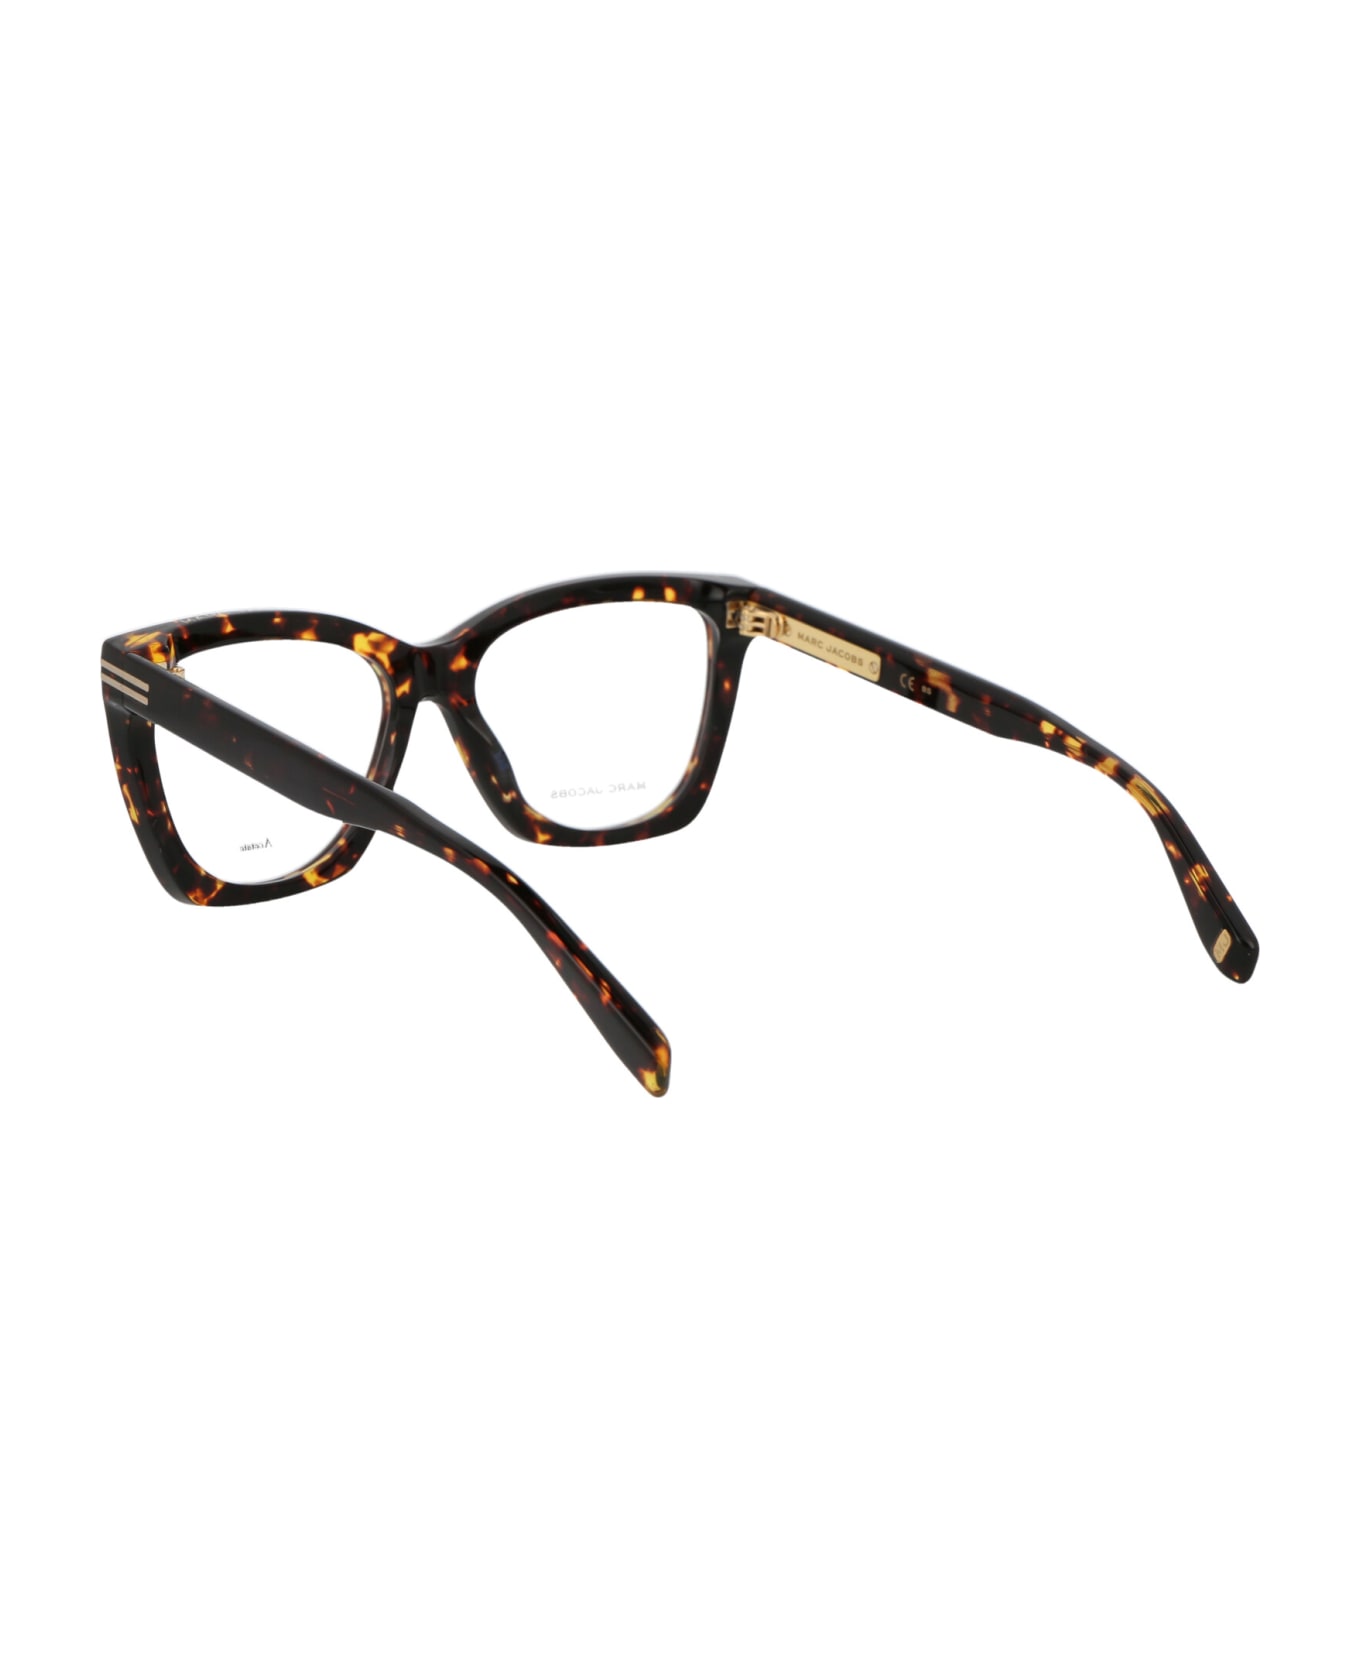 Marc Jacobs Eyewear Mj 1014 Glasses - 086 HAVANA アイウェア